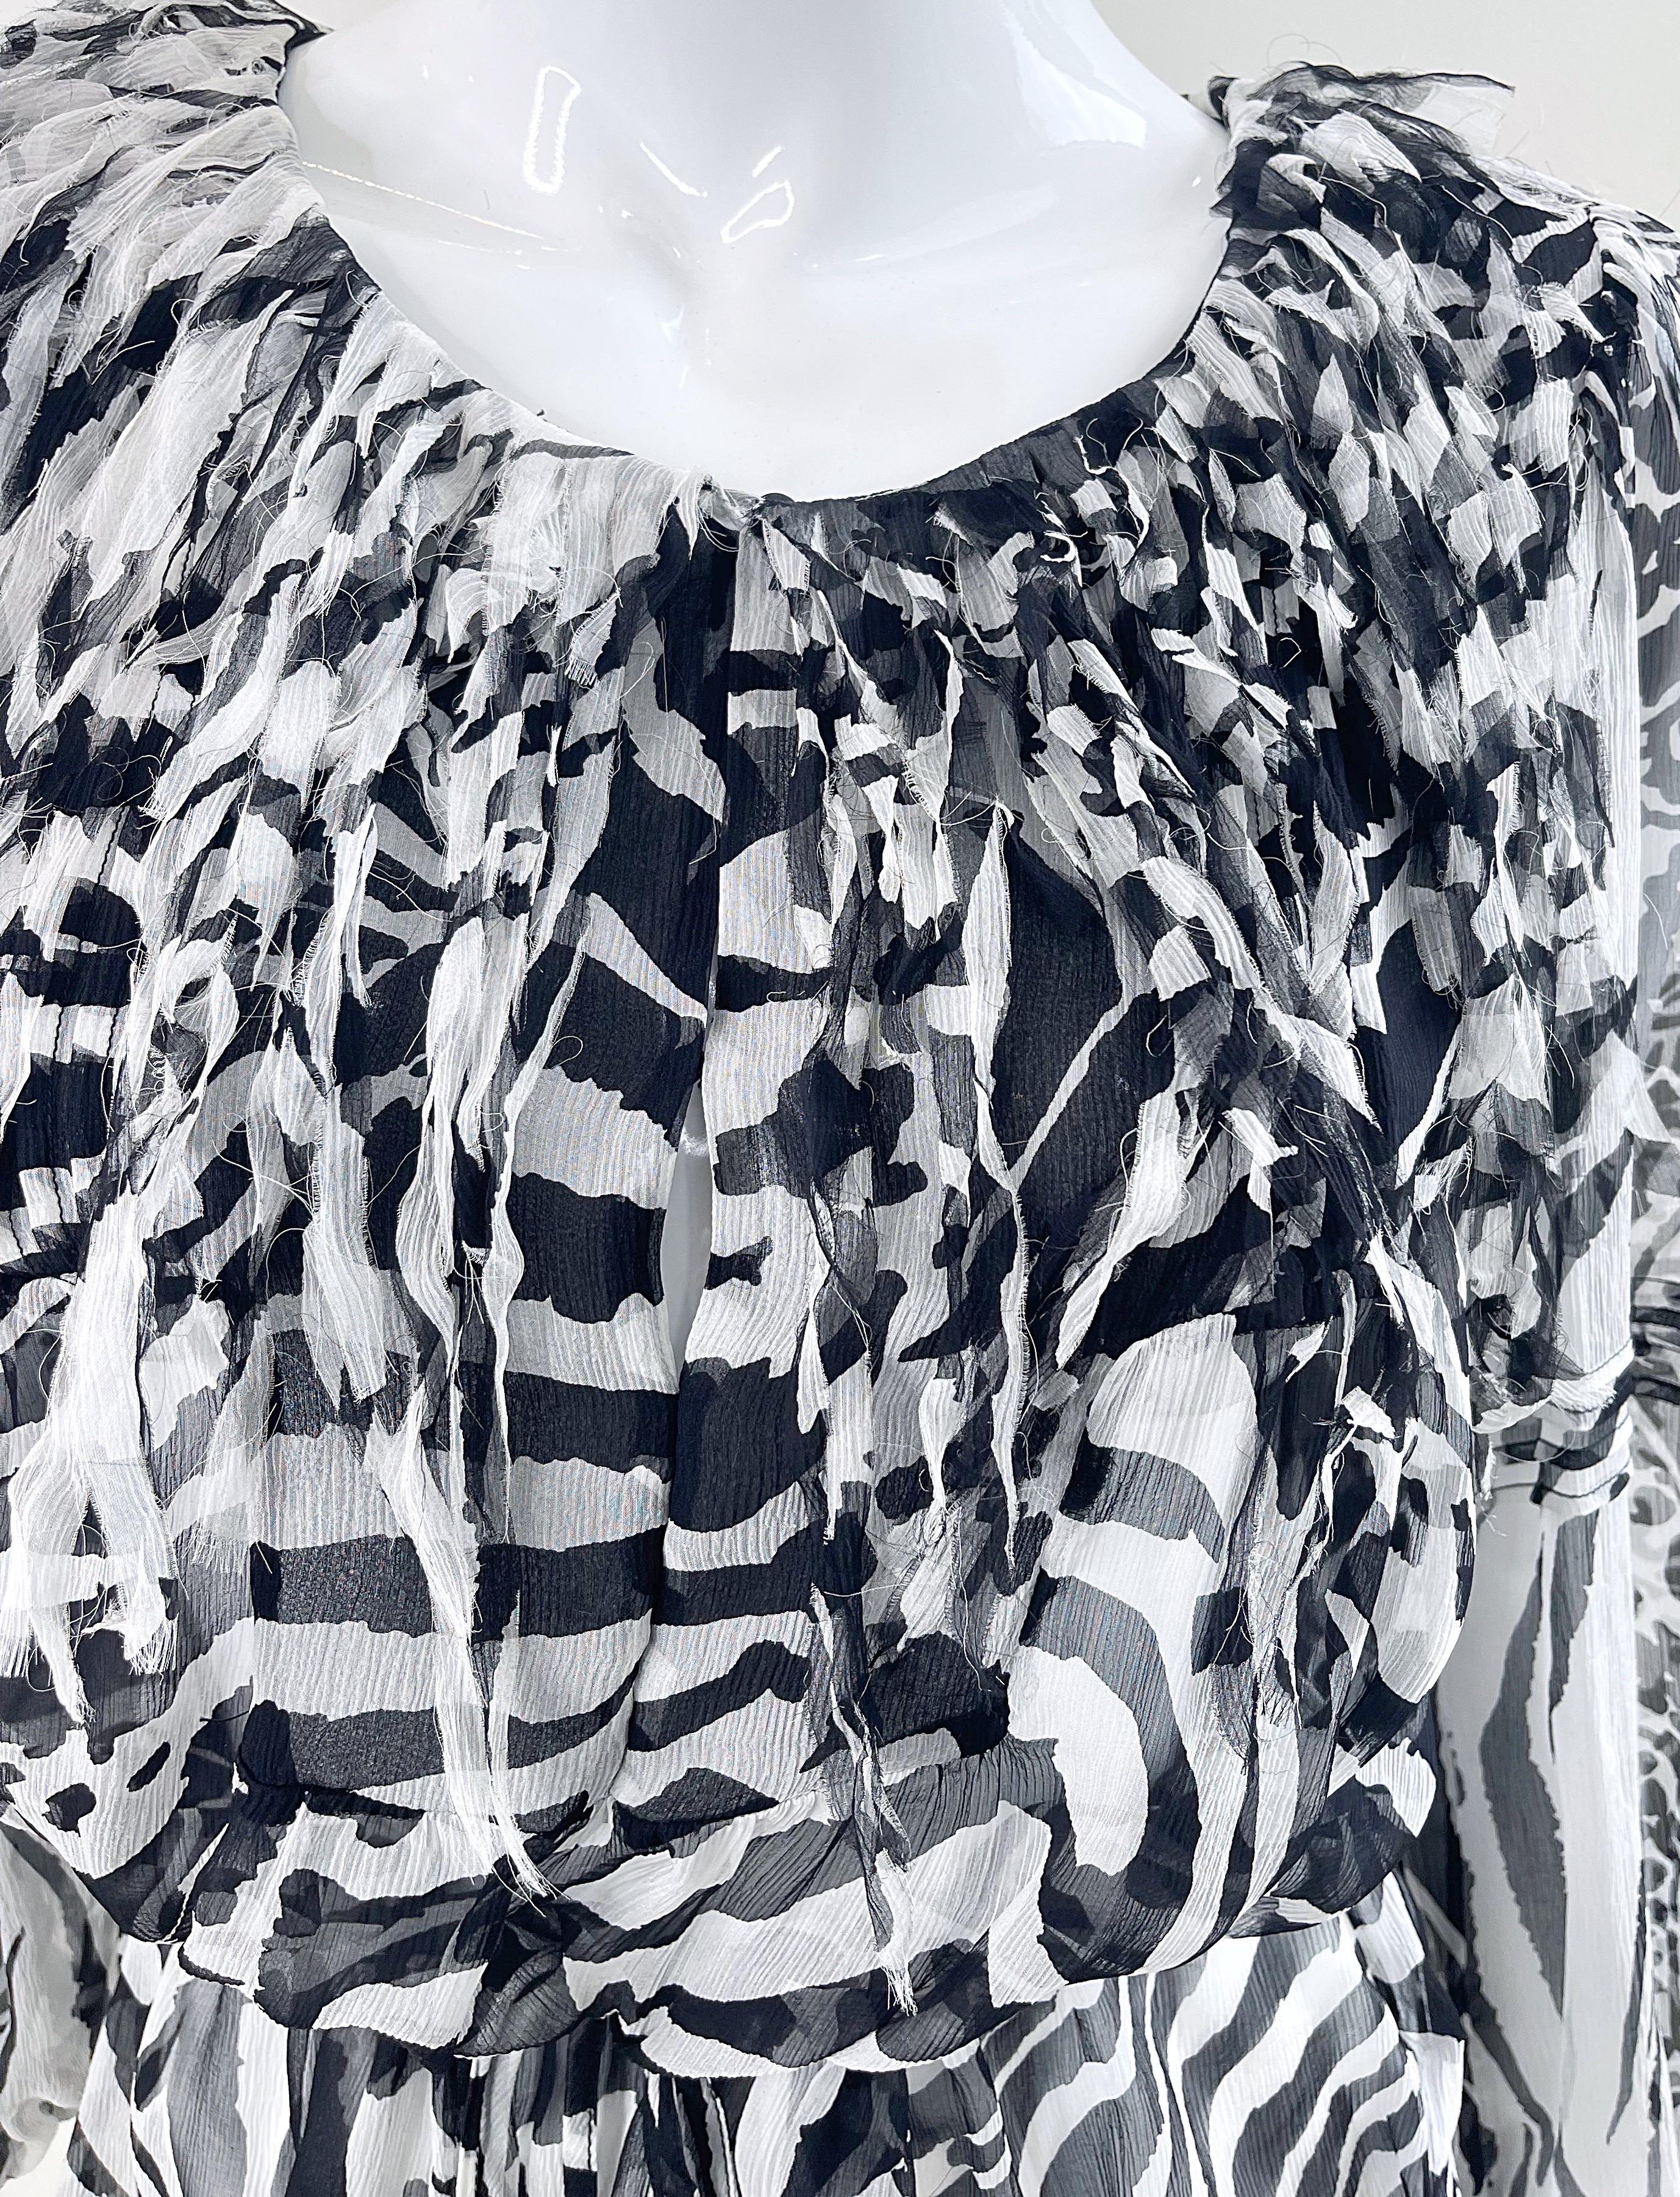 Blumarine Fall 2010 Zebra Print Black and White Fringe Silk Chiffon Blouse Top For Sale 8